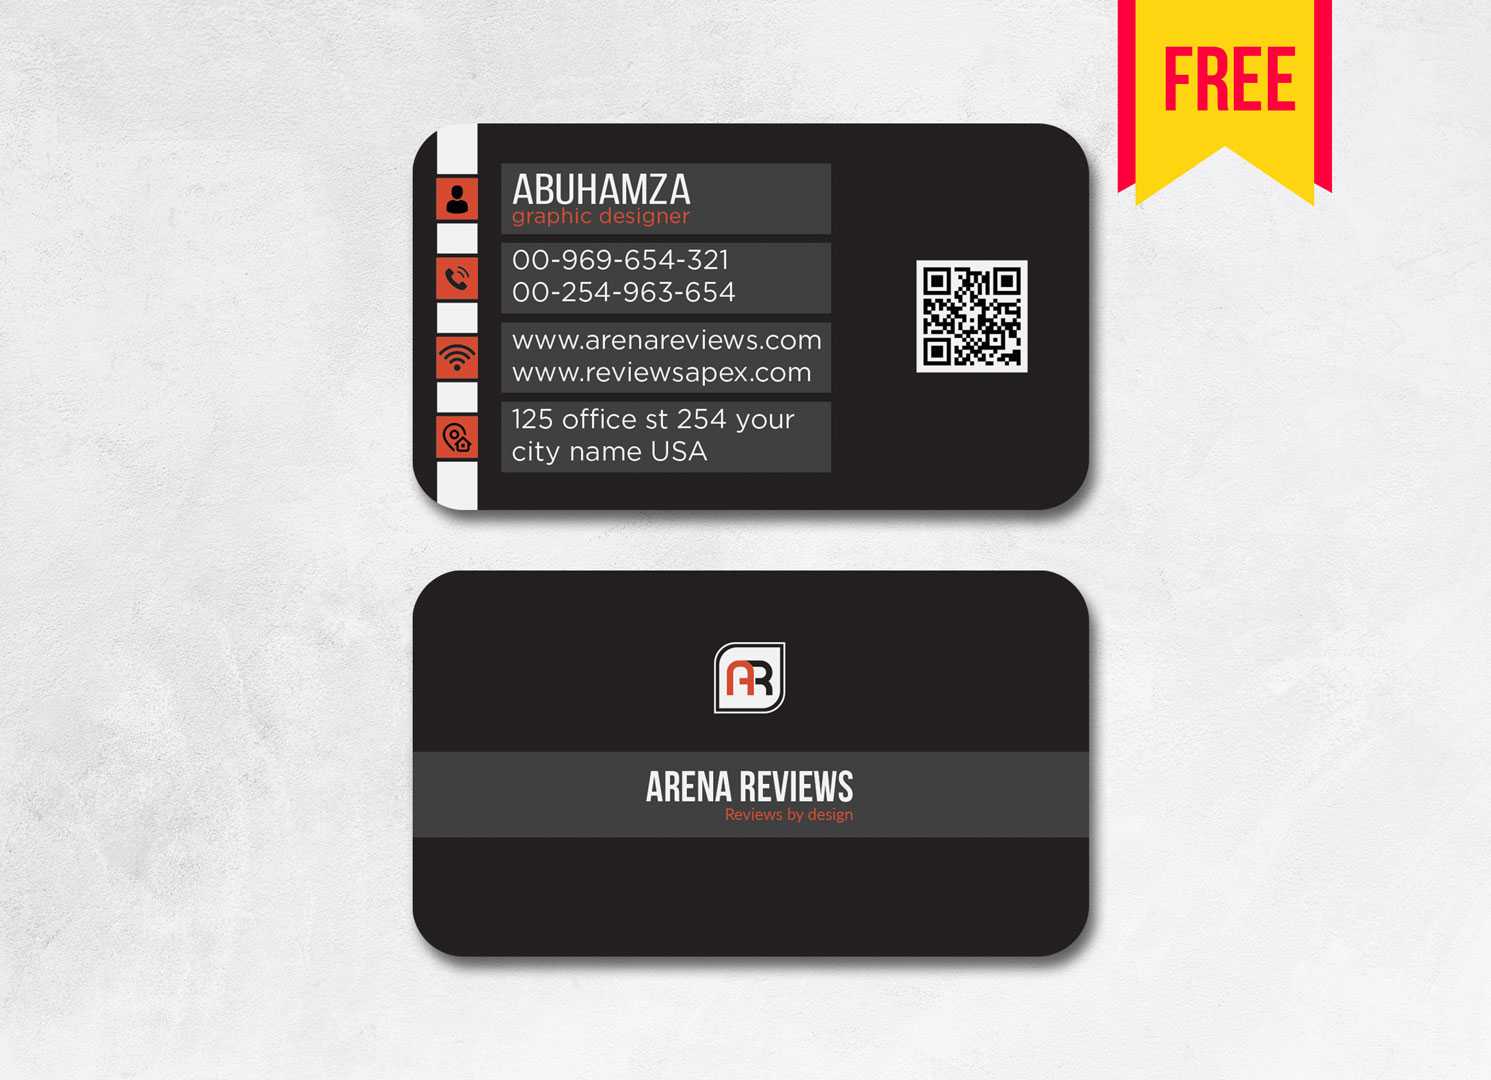 Dark Business Card Template Psd File | Free Download Inside Business Card Size Template Psd